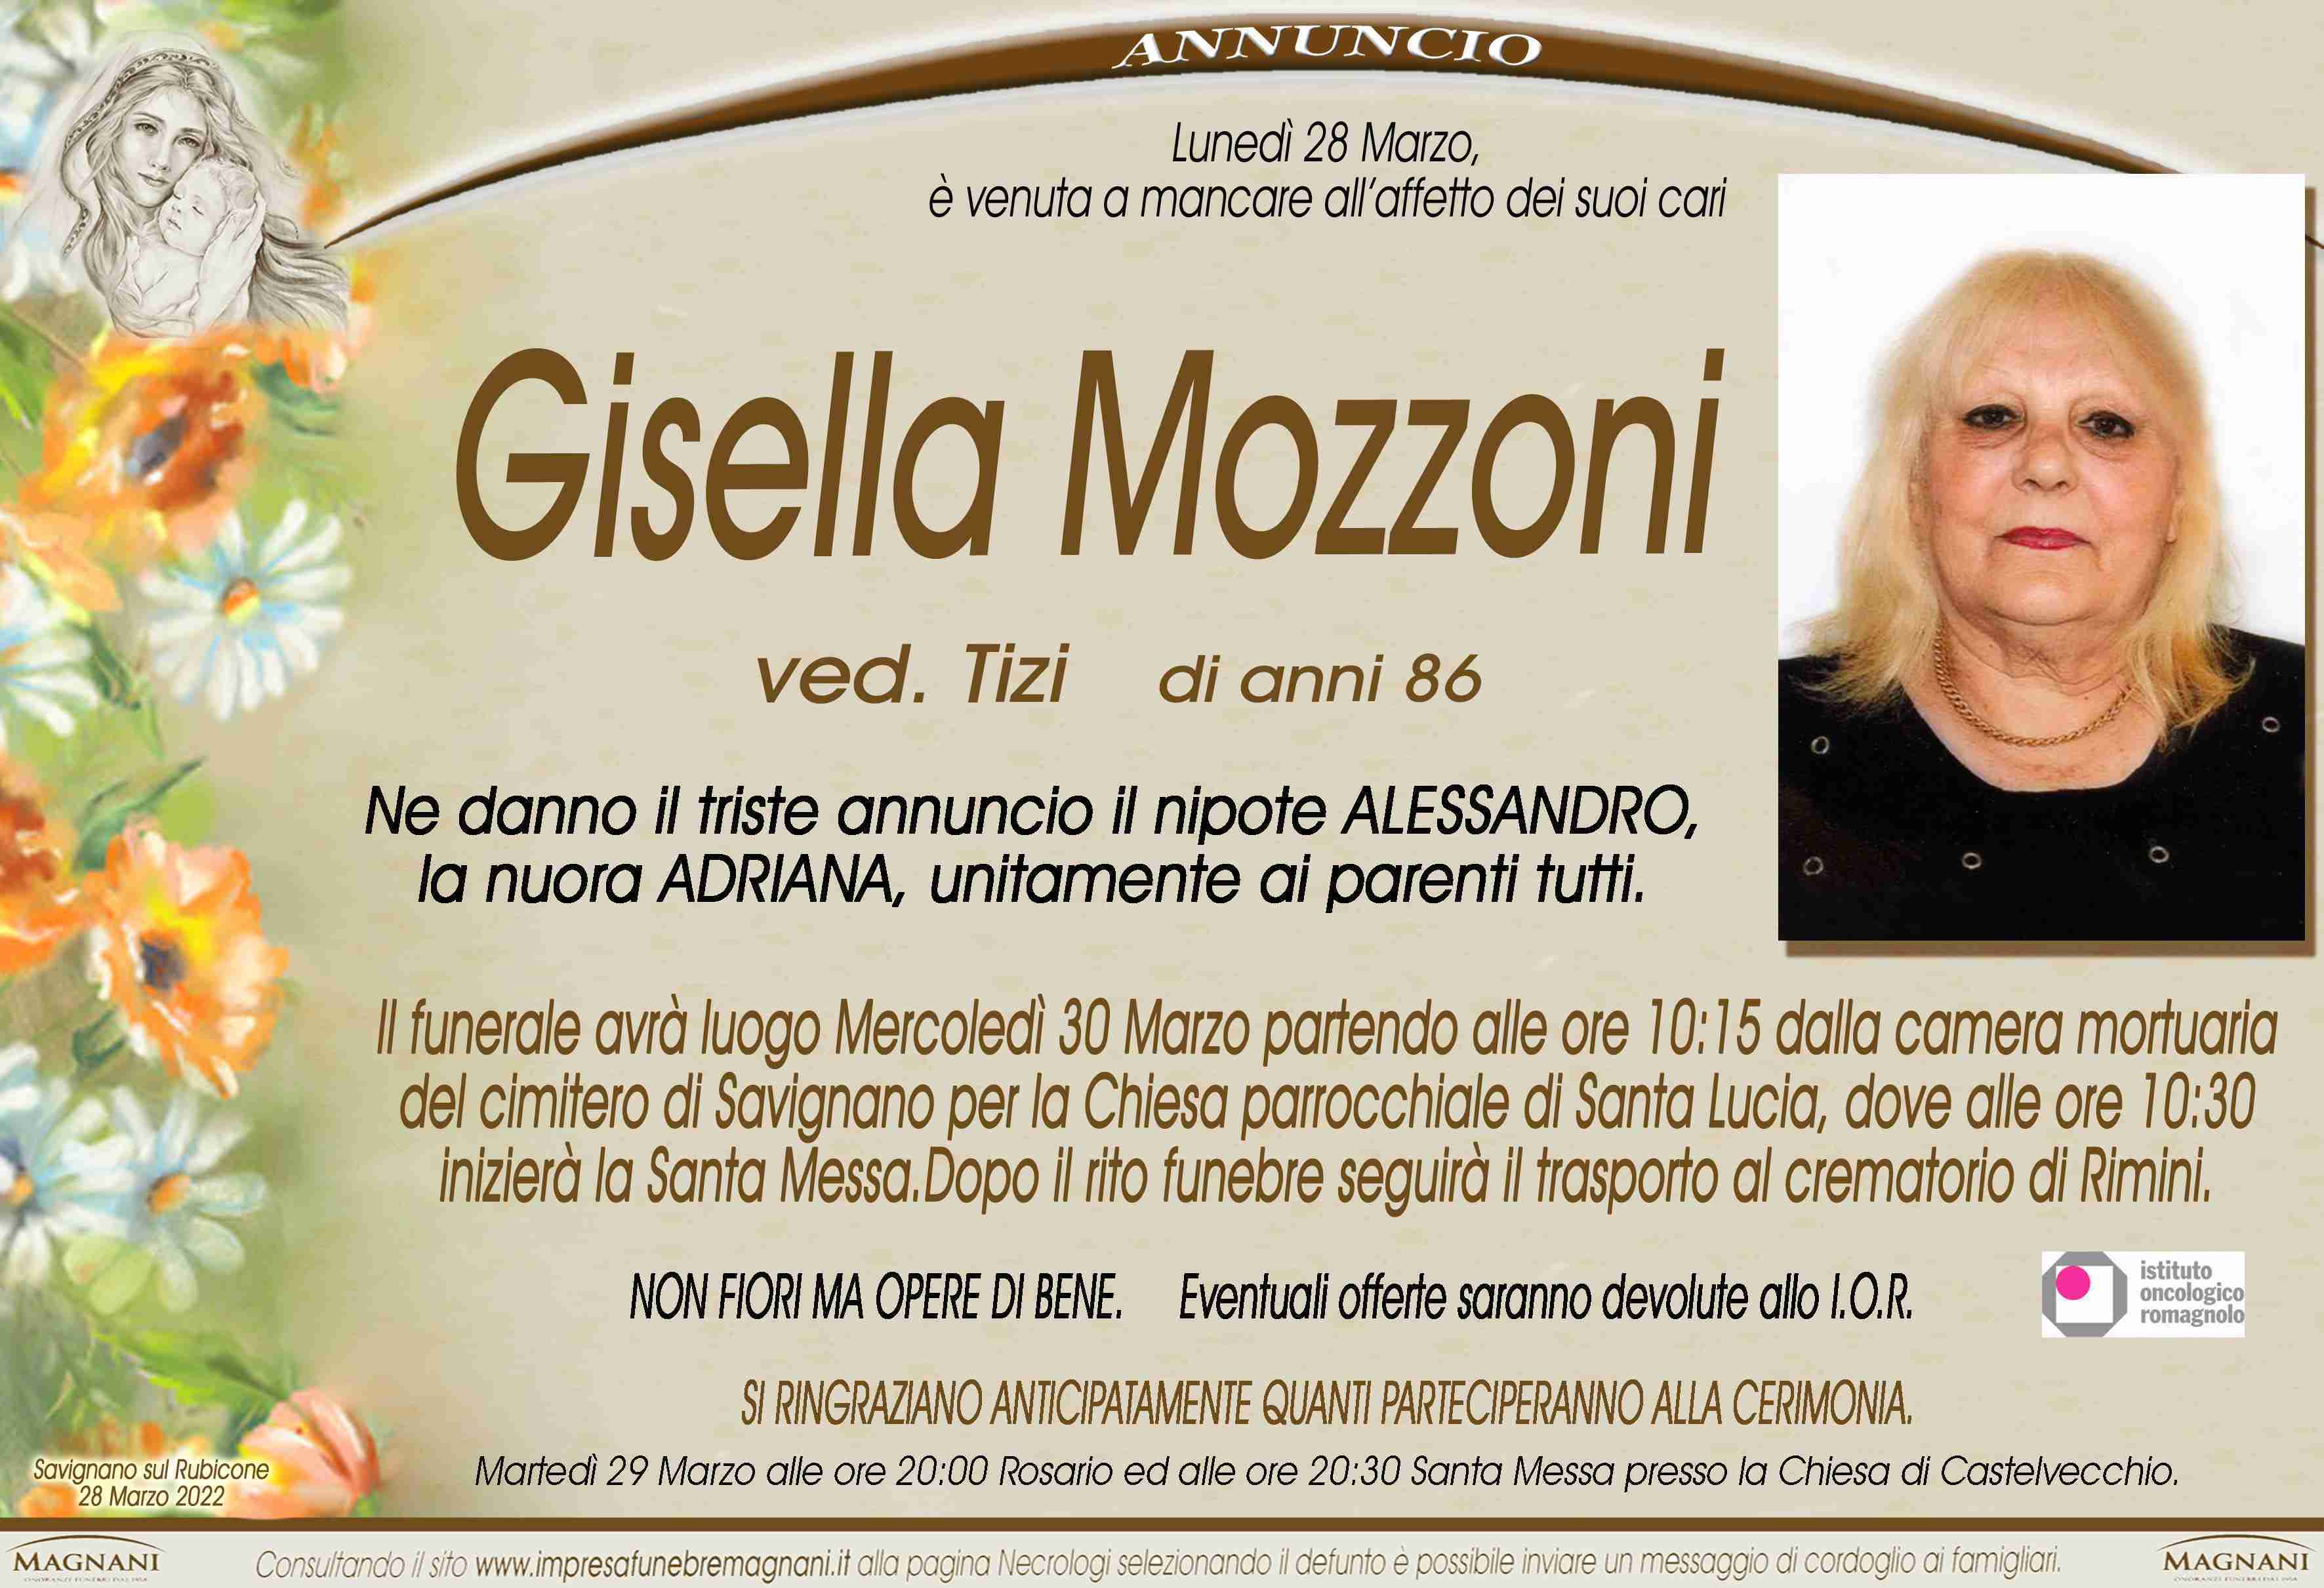 Gisella Mozzoni